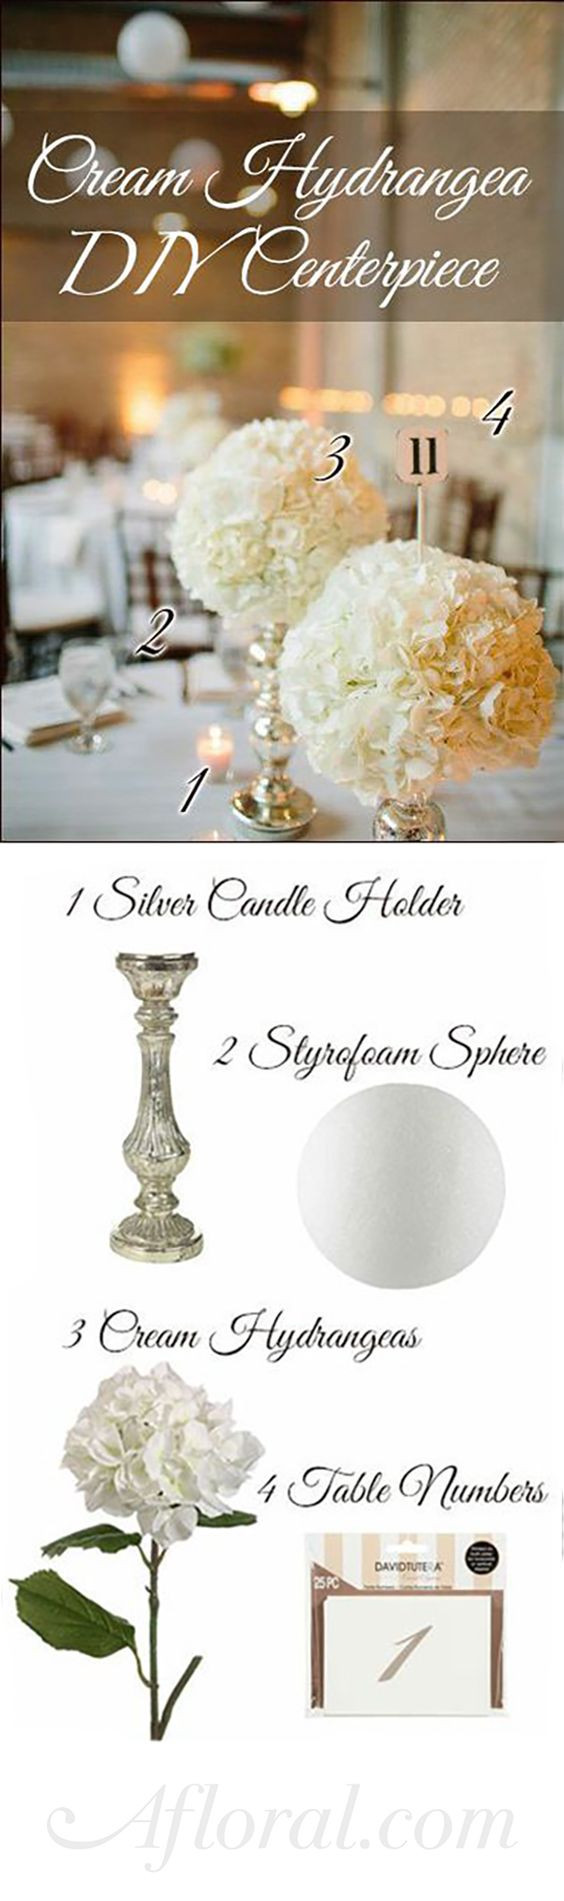 DIY Centerpieces For Wedding Reception
 Affordable Wedding Centerpieces Original Ideas Tips & DIYs